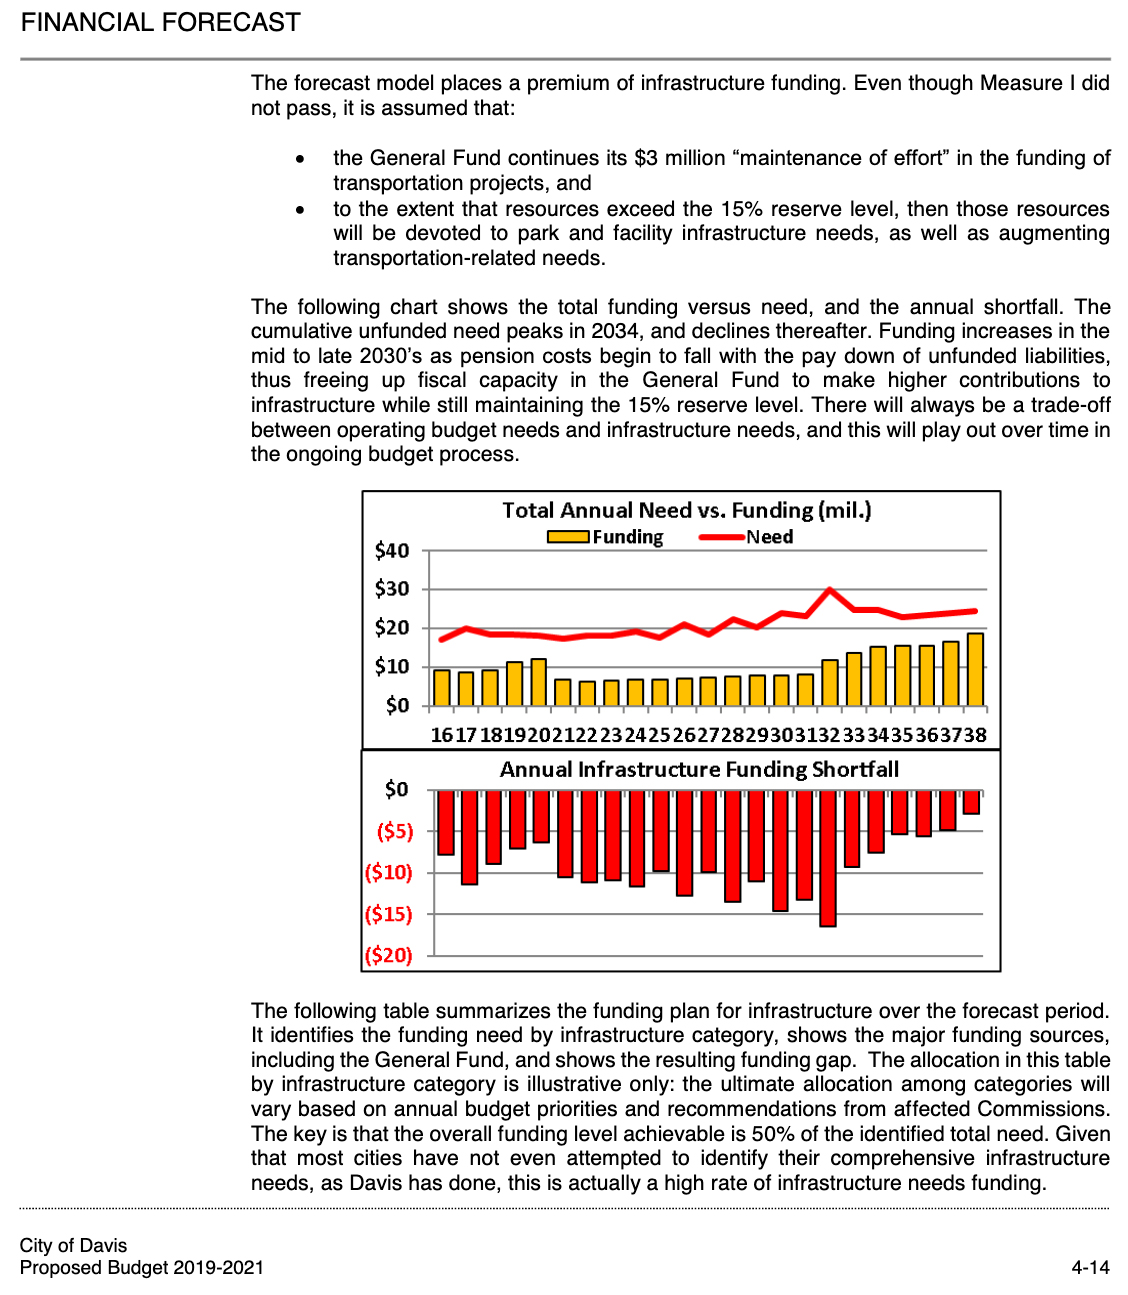 https://www.davisvanguard.org/wp-content/uploads/2019/06/04-Financial-Forecast-Proposed-FY19-20-page-4-14.jpg